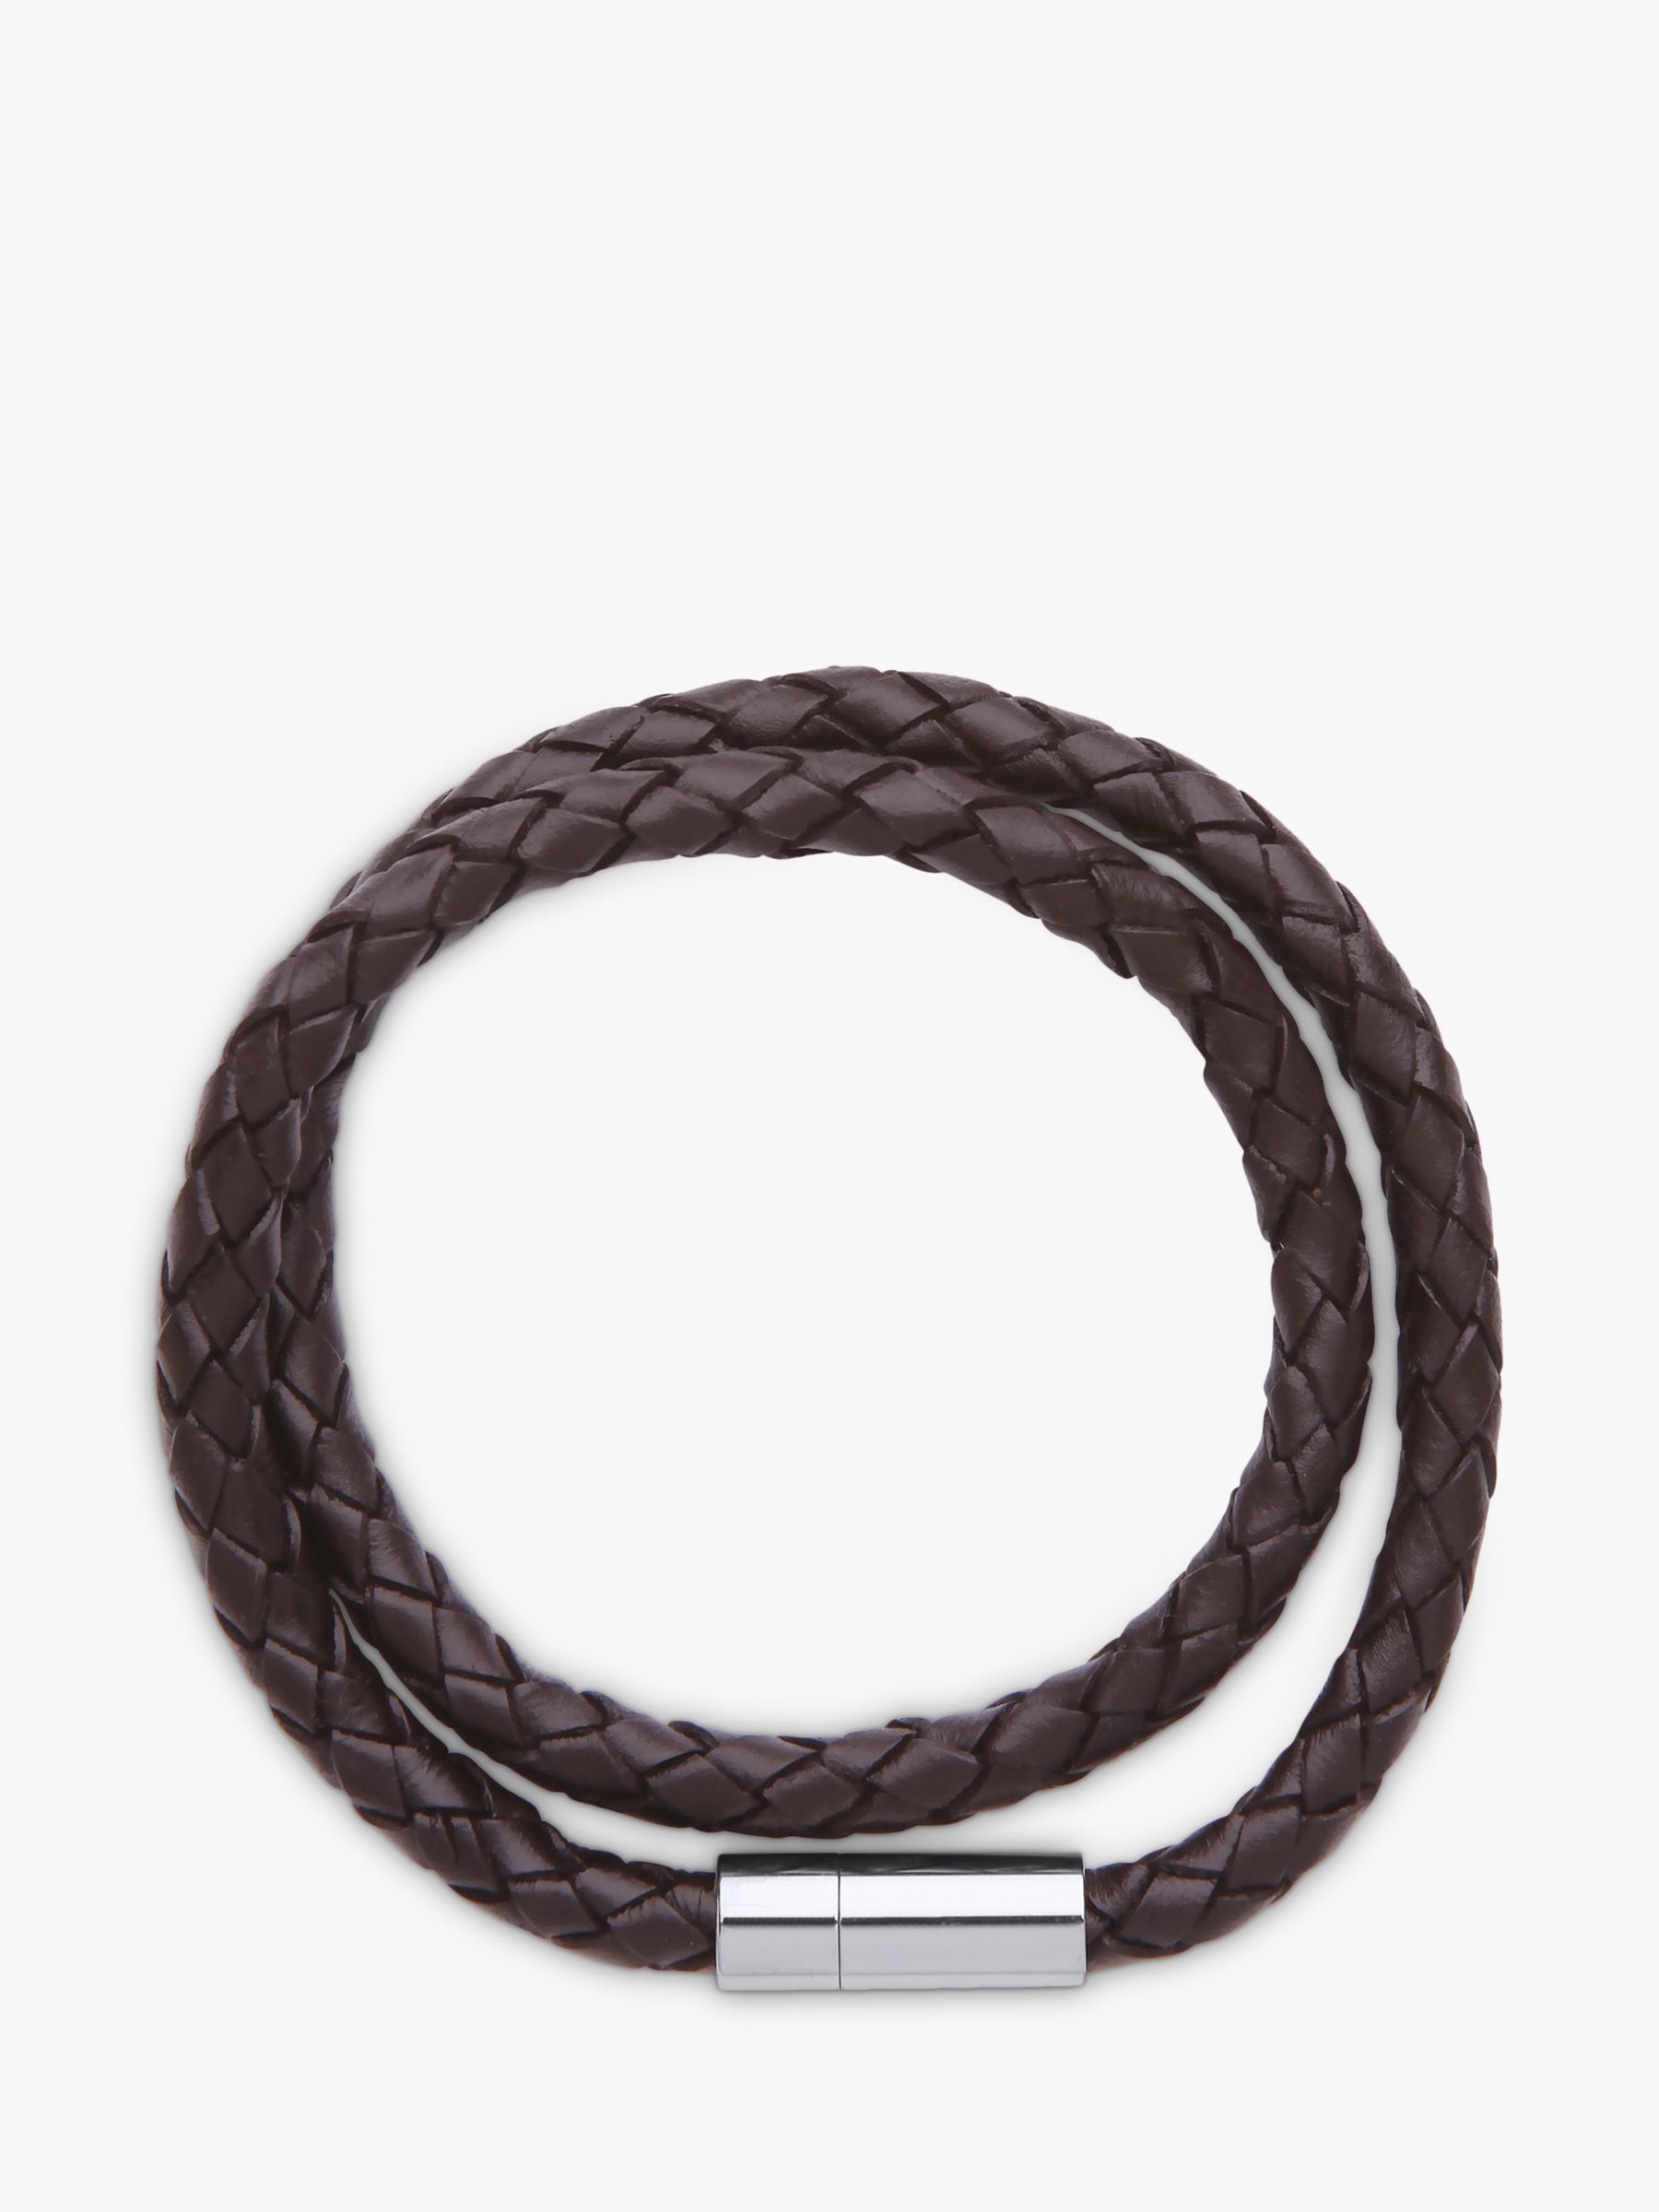 BARTLETT LONDON Men's Woven Leather Double Wrap Bracelet, Brown